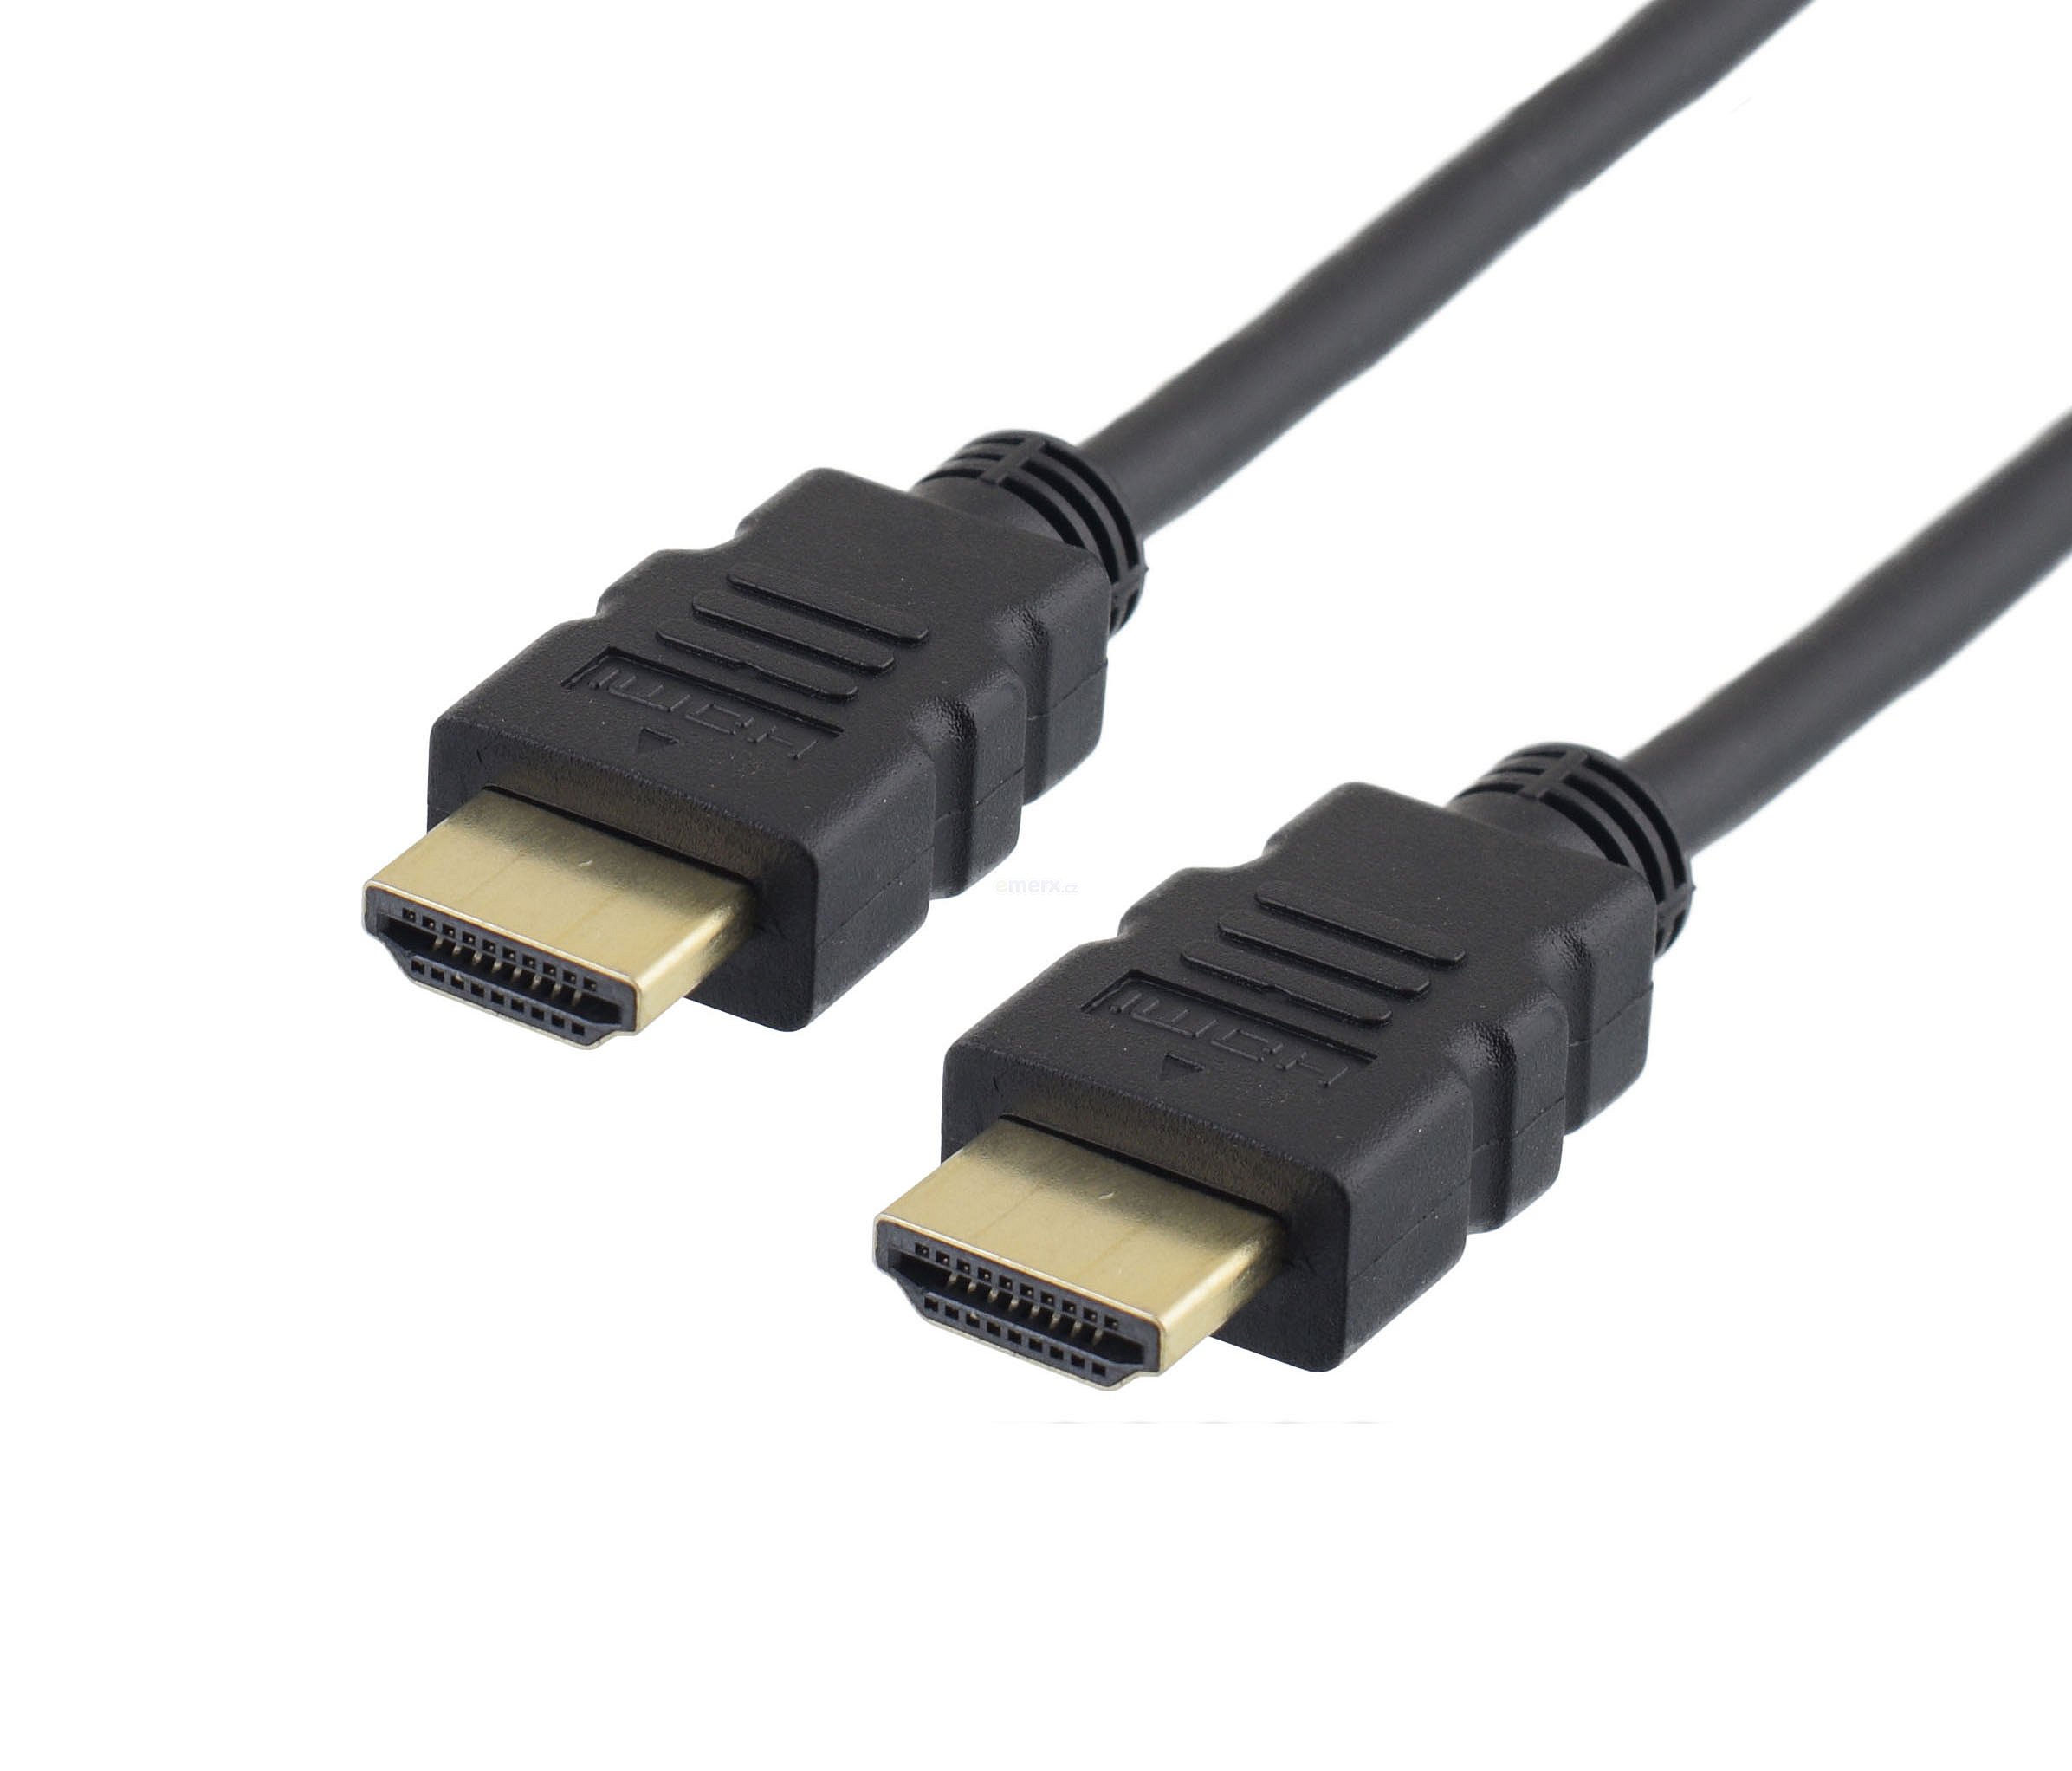 Propojovací kabel  HDMI 1.4 na HDMI 1.4 , délka 1m (HS-101-1)